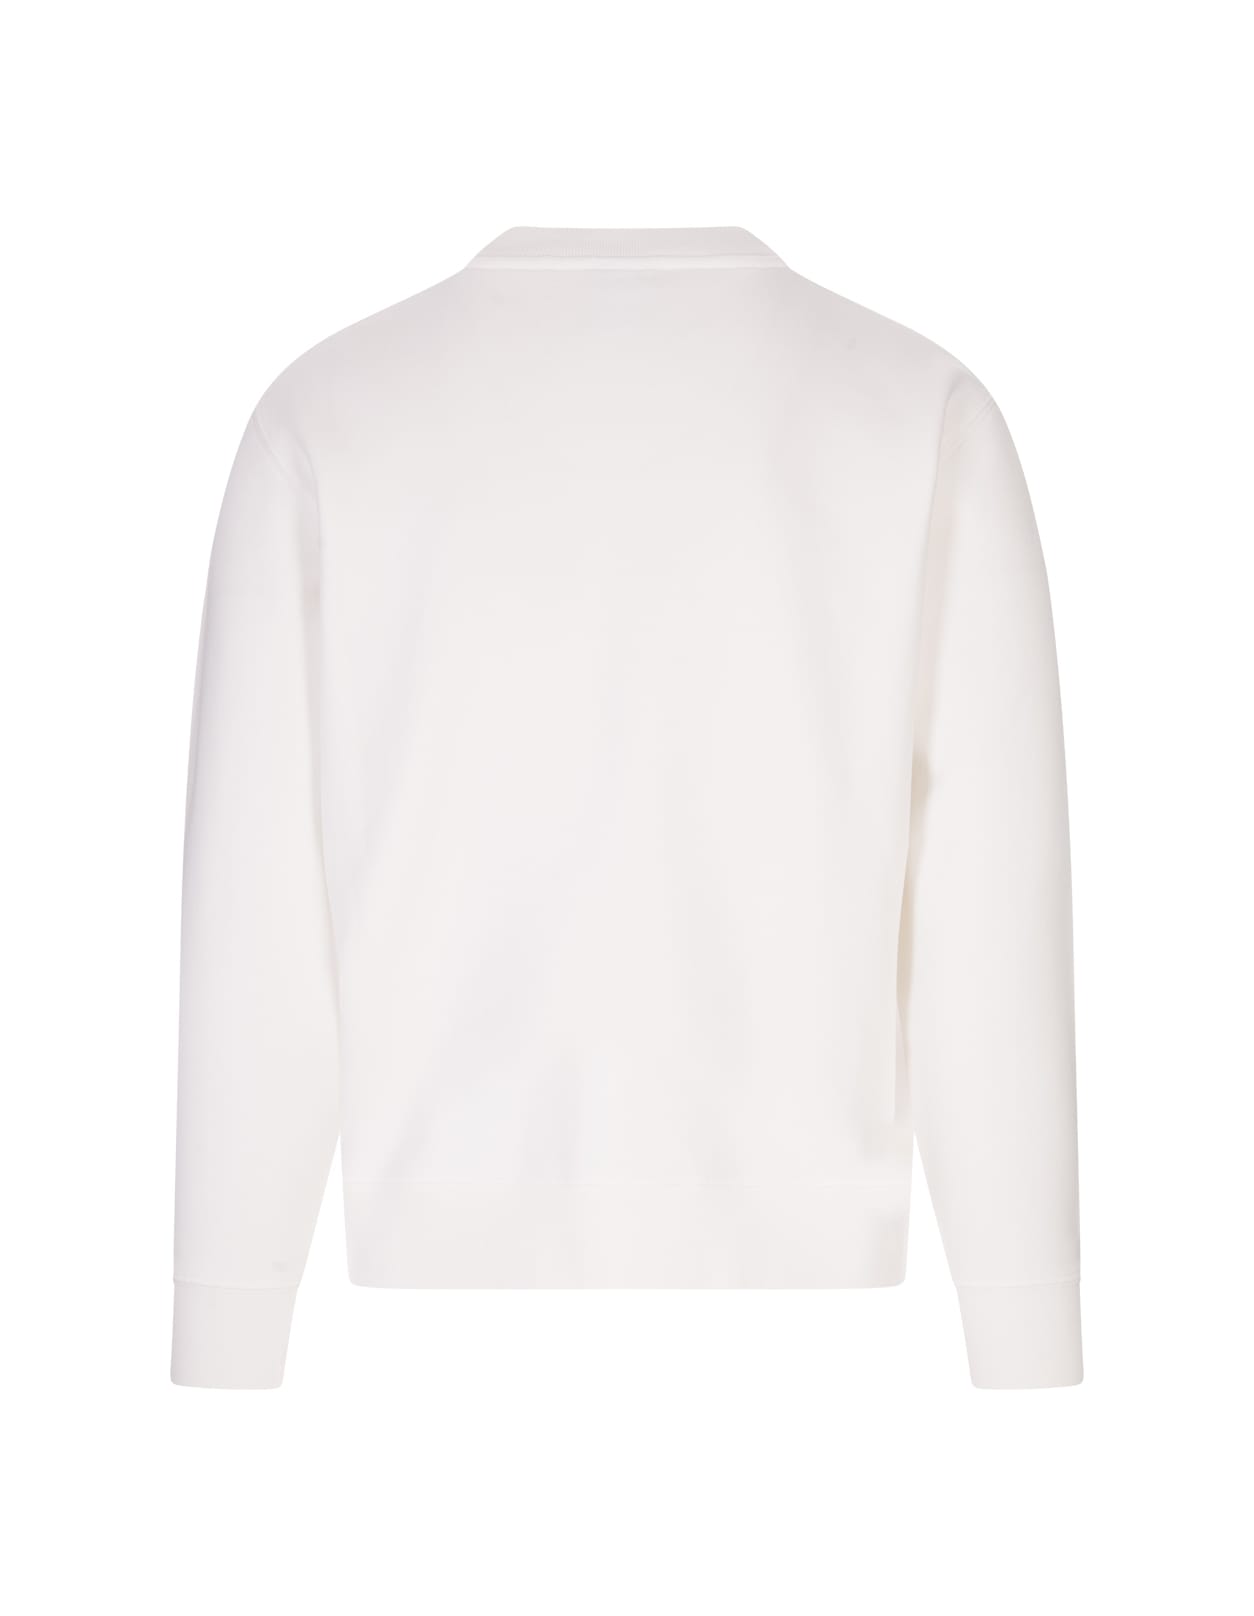 Shop Autry White Crewneck Sweatshirt With Embroidered Logo